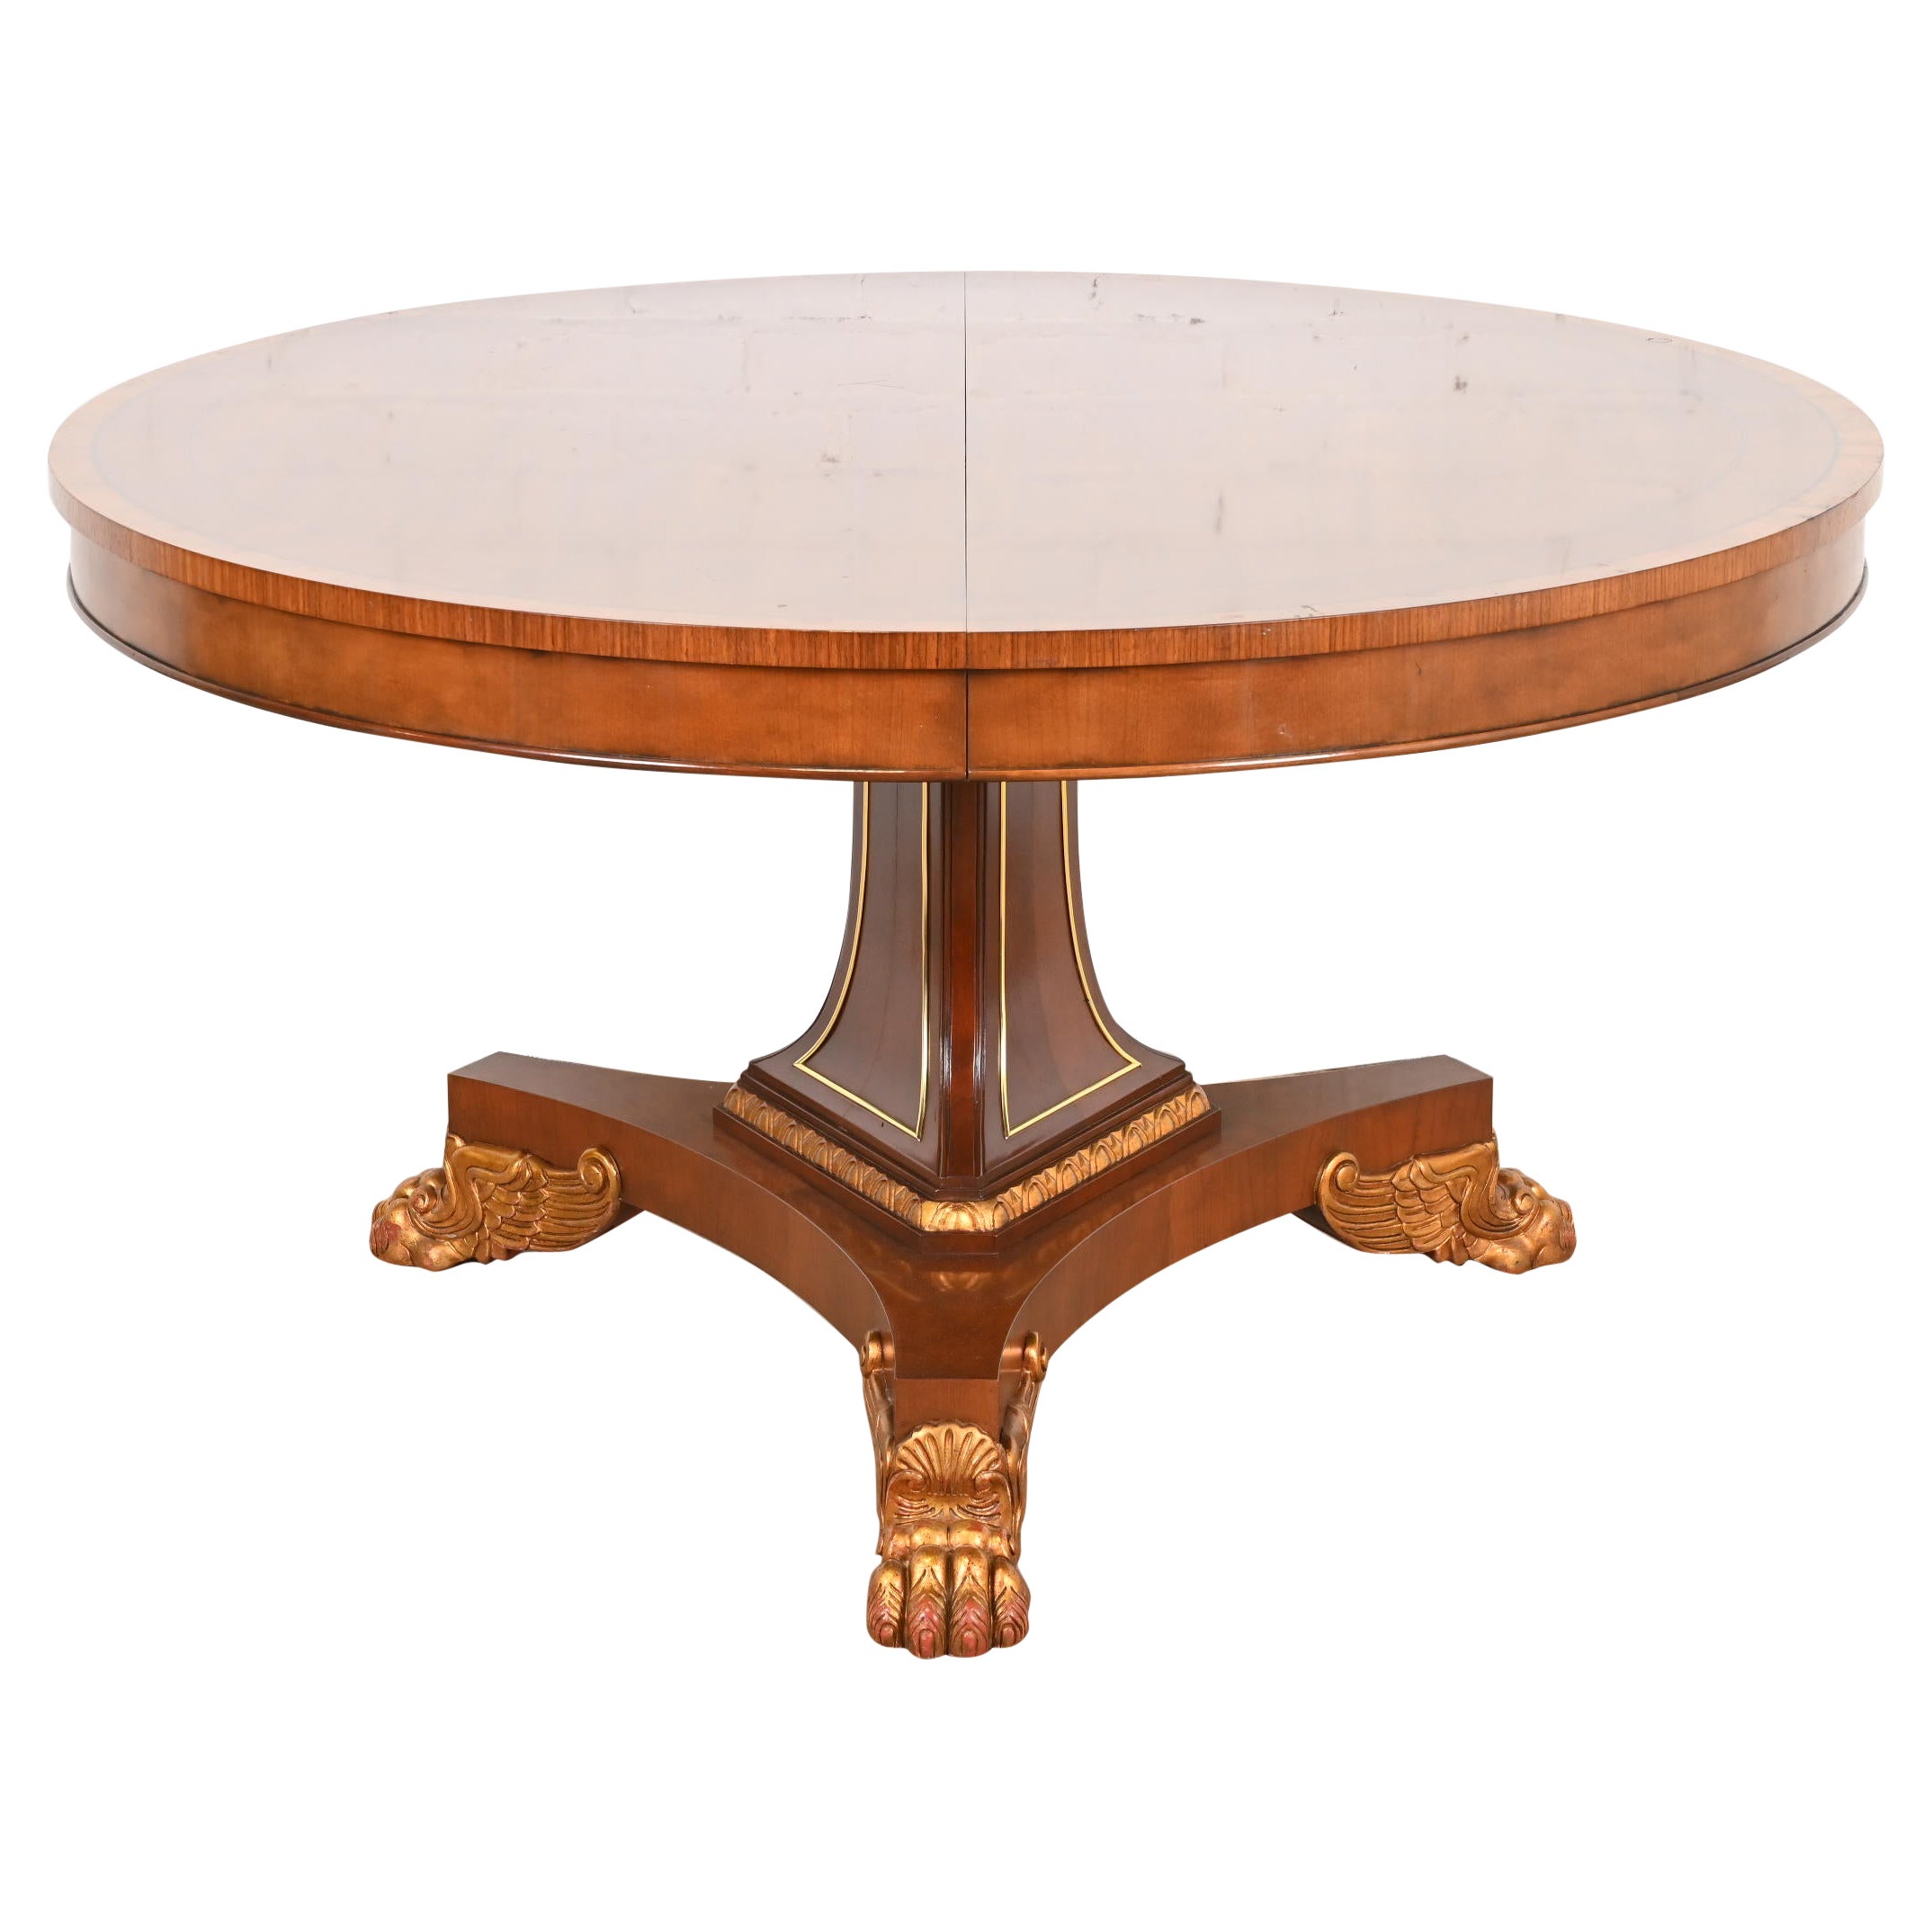 Baker Furniture Regency Paw Foot Pedestal Dining Table or Center Table For Sale